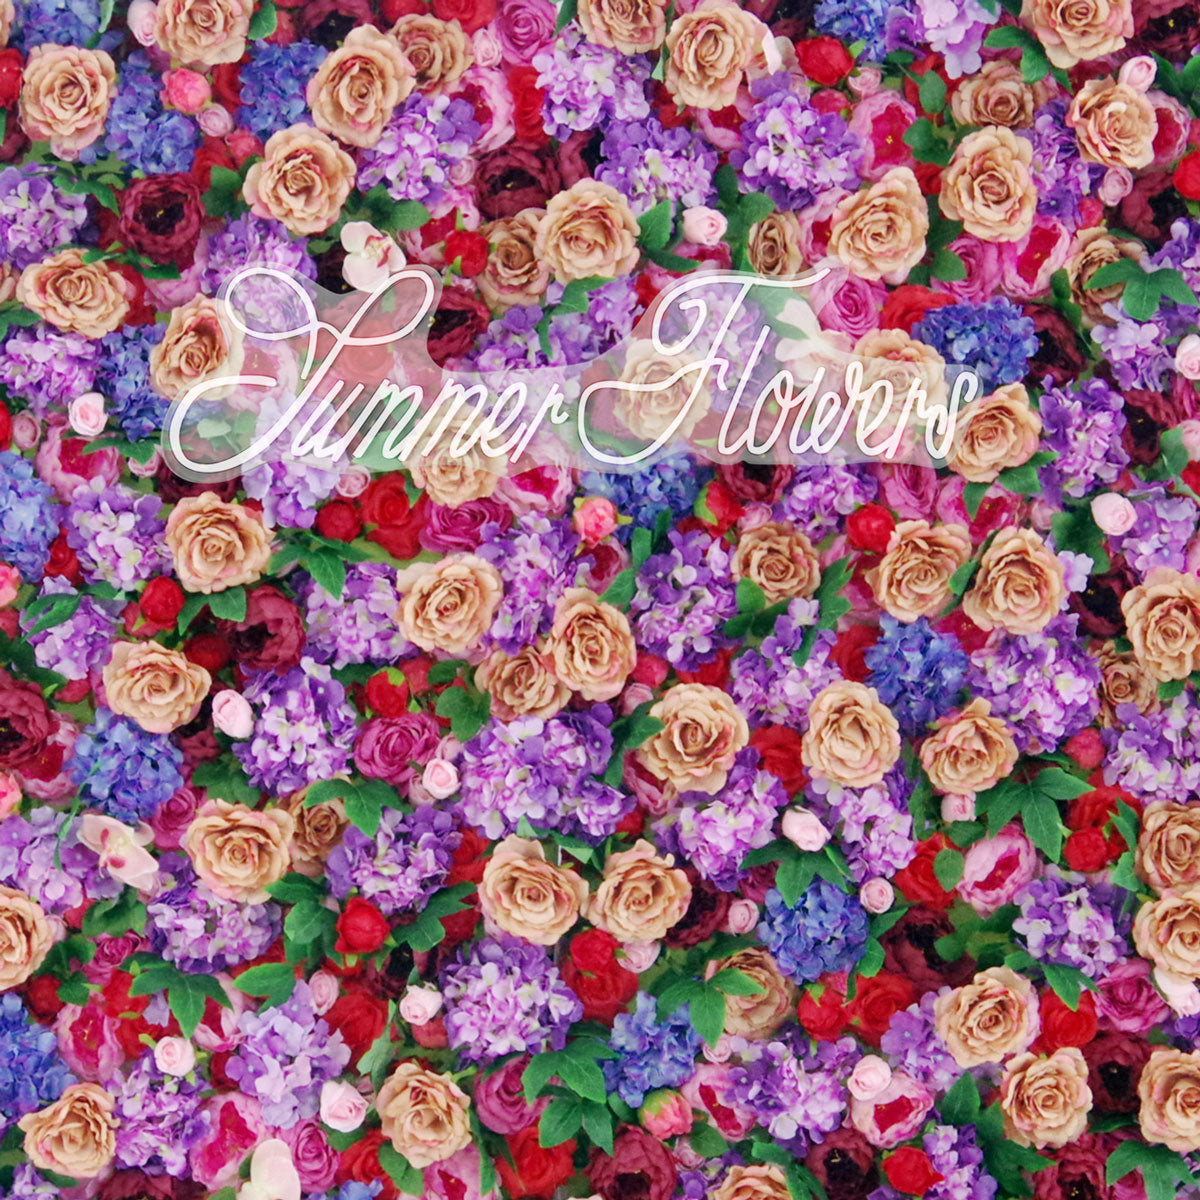 Summer Flower:CB-066 8ft*8ft Cloth Back Artificial Flower Wall Backdrop